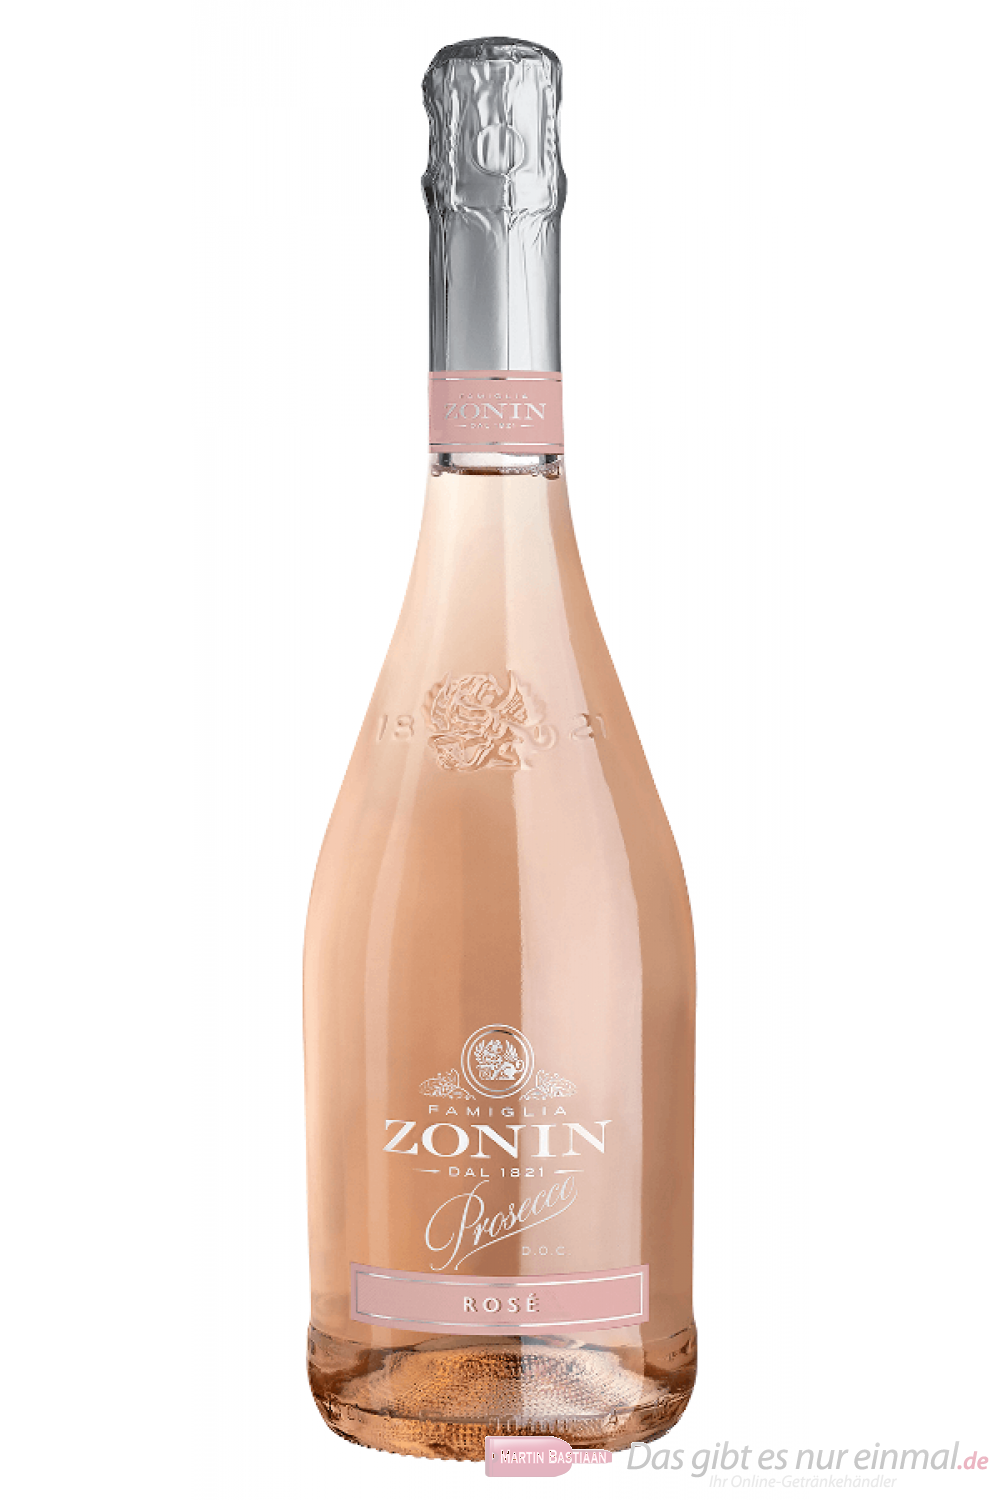 Zonin Prosecco Spumante 6-0,75l DOC Flaschen Millesimato Rose Dry Extra